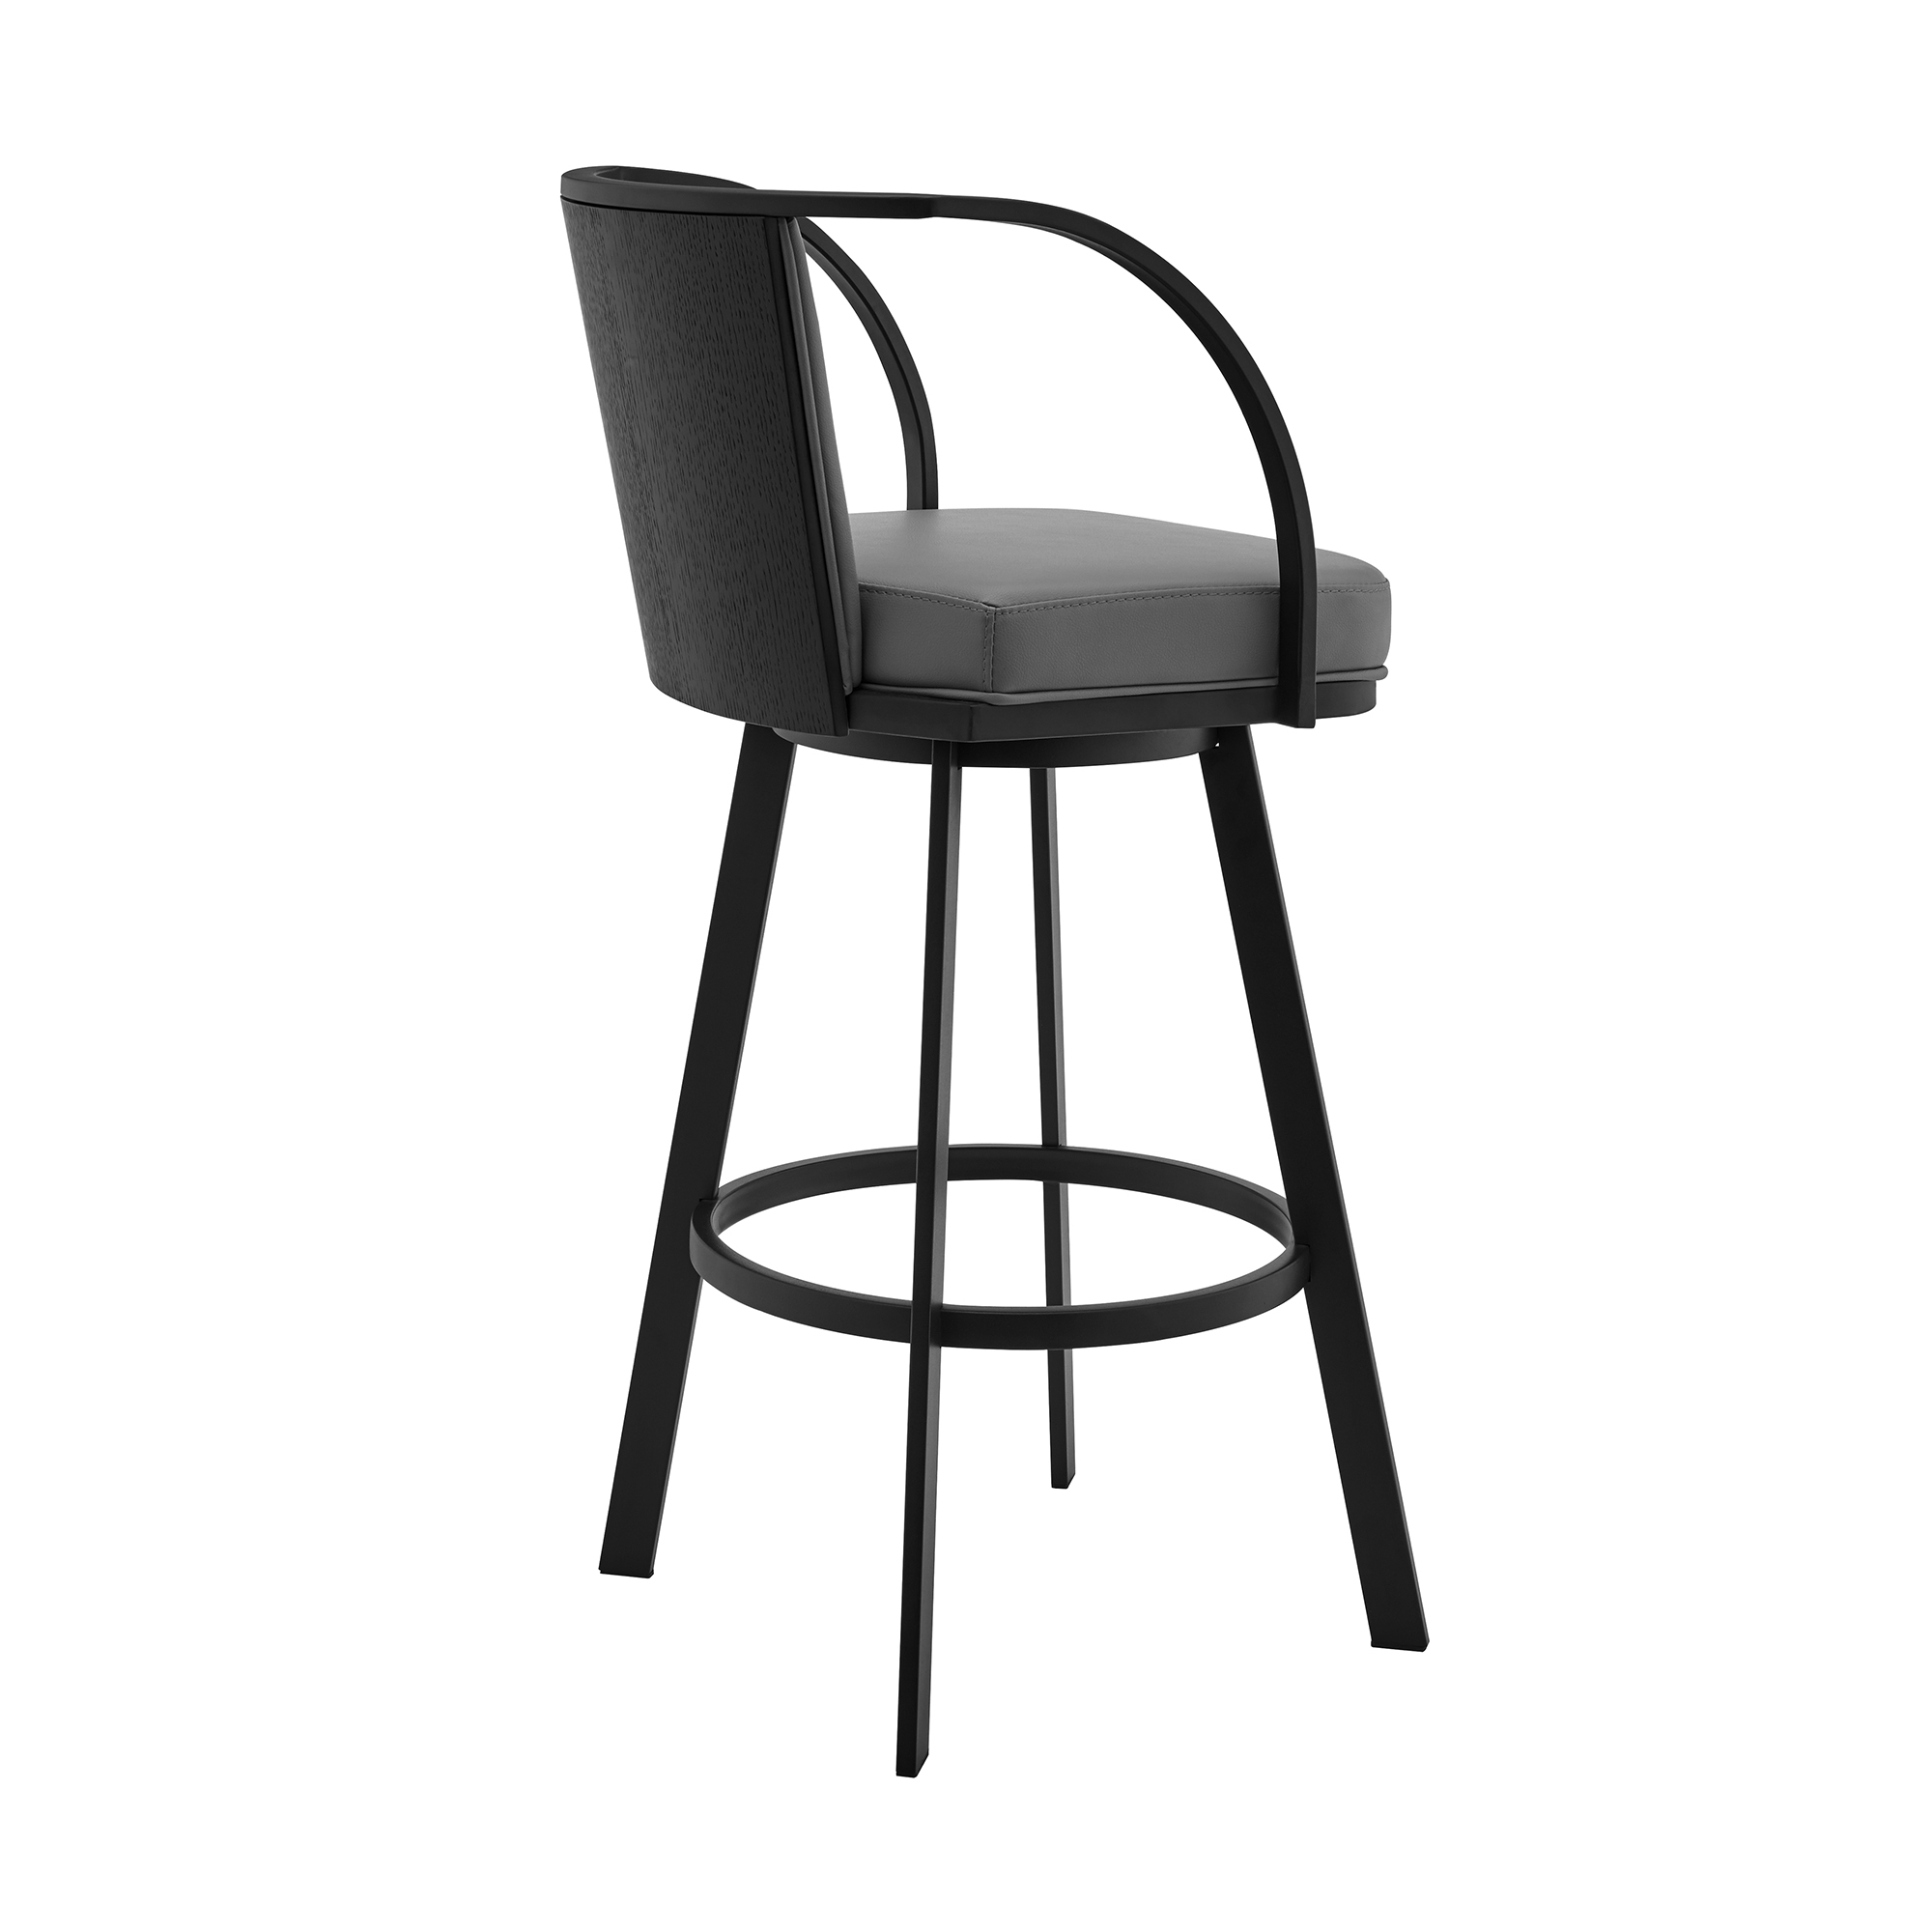 Ovn 30 Inch Modern Swivel Barstool Chair, Gray Faux Leather, Black Steel- Saltoro Sherpi